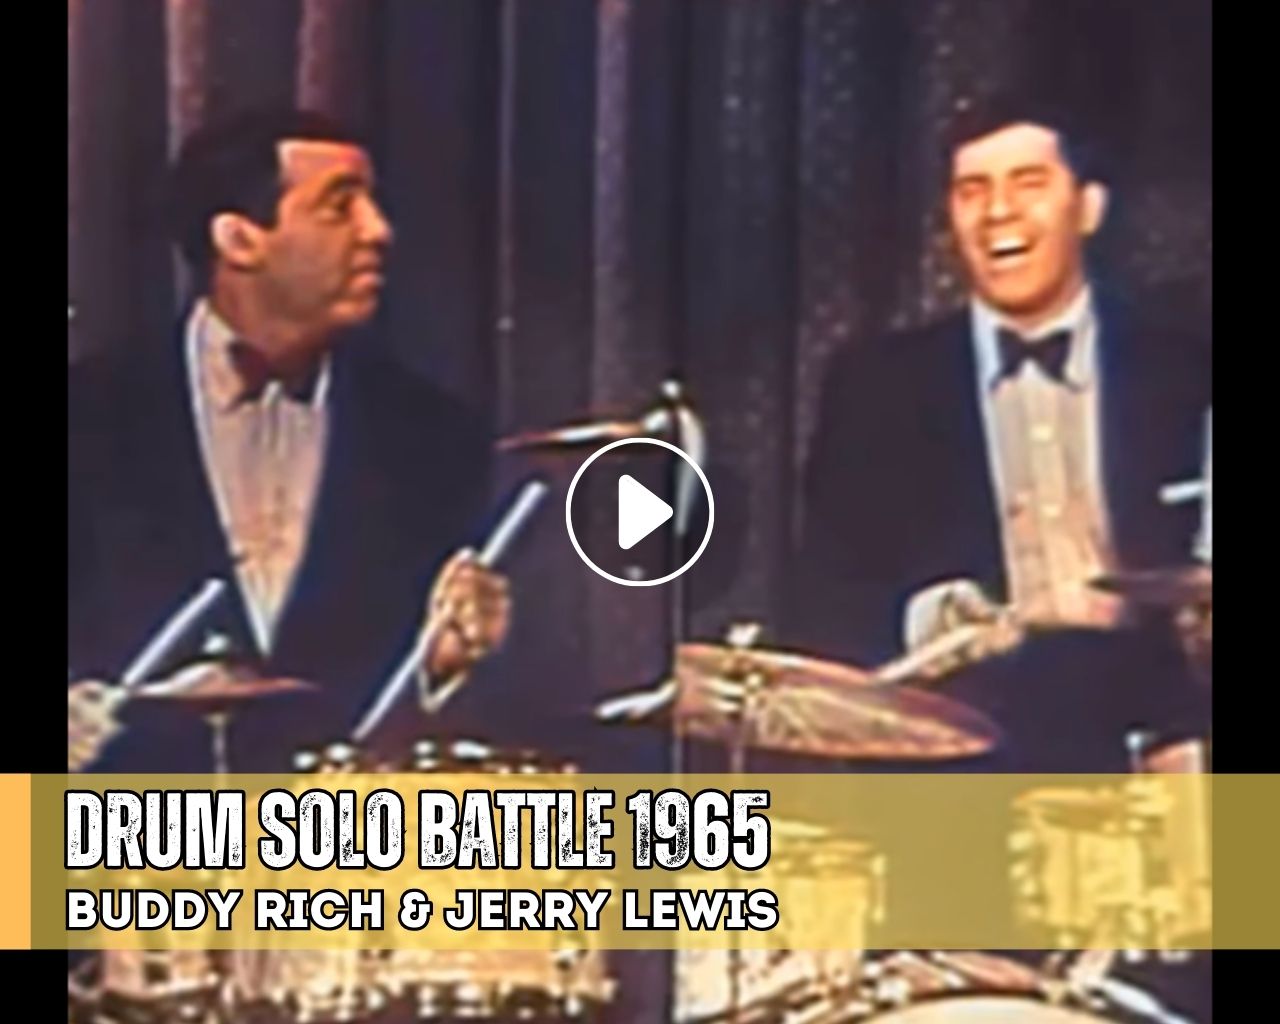 Buddy Rich & Jerry Lewis - Drum Solo Battle